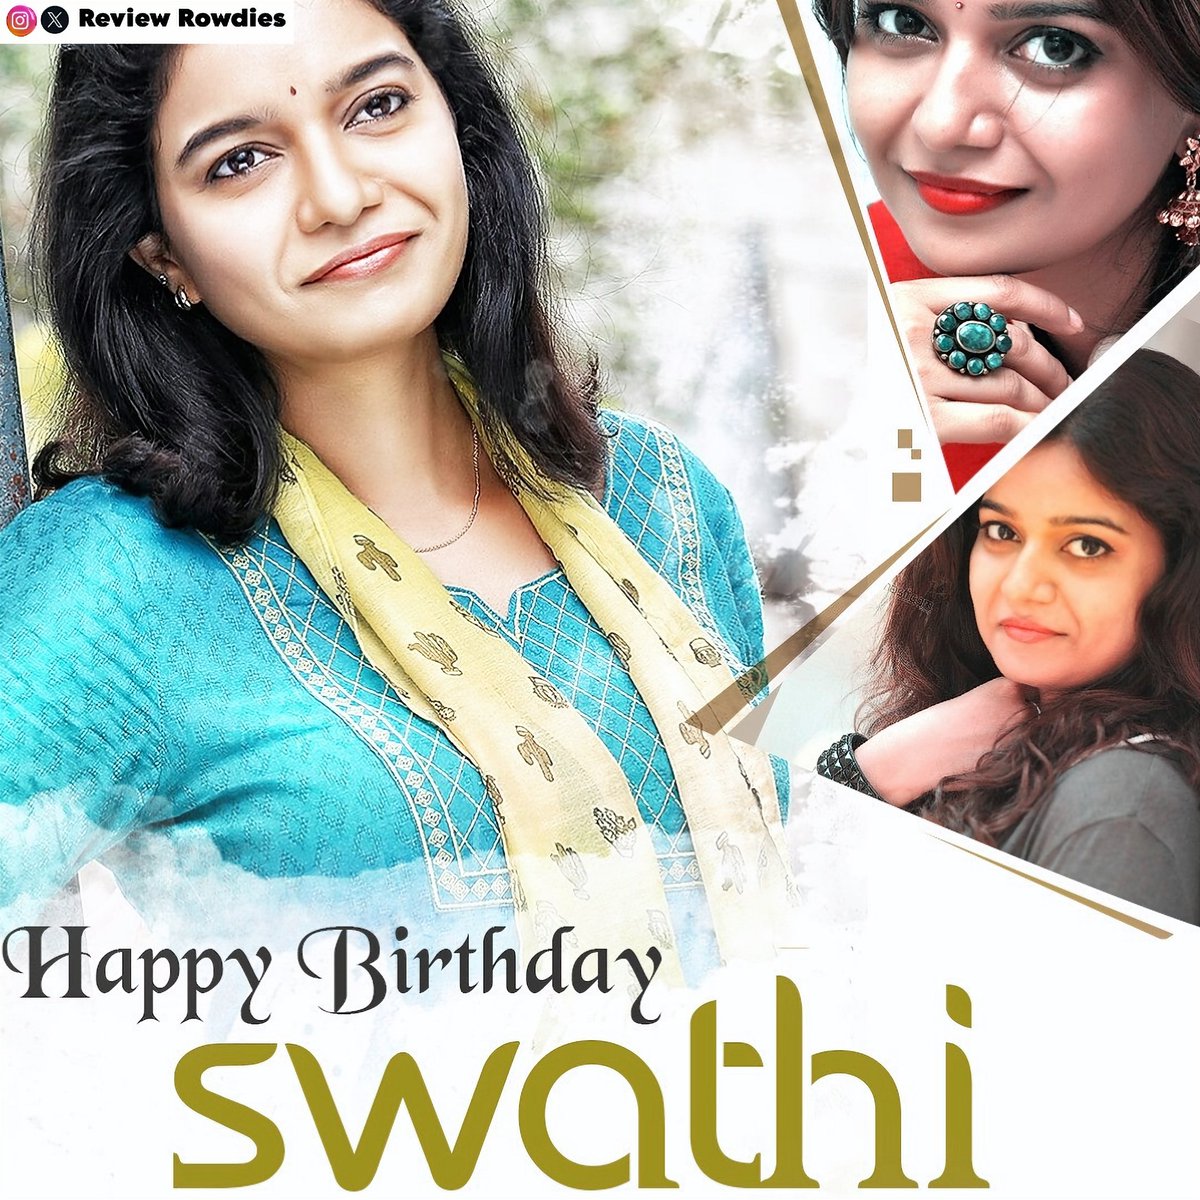 Wishing Swathi Reddy A Very Happy Birthday

#HappyBirthdaySwathiReddy #HBDSwathiReddy #SwathiReddy #ColorsSwathi #Reviewrowdies